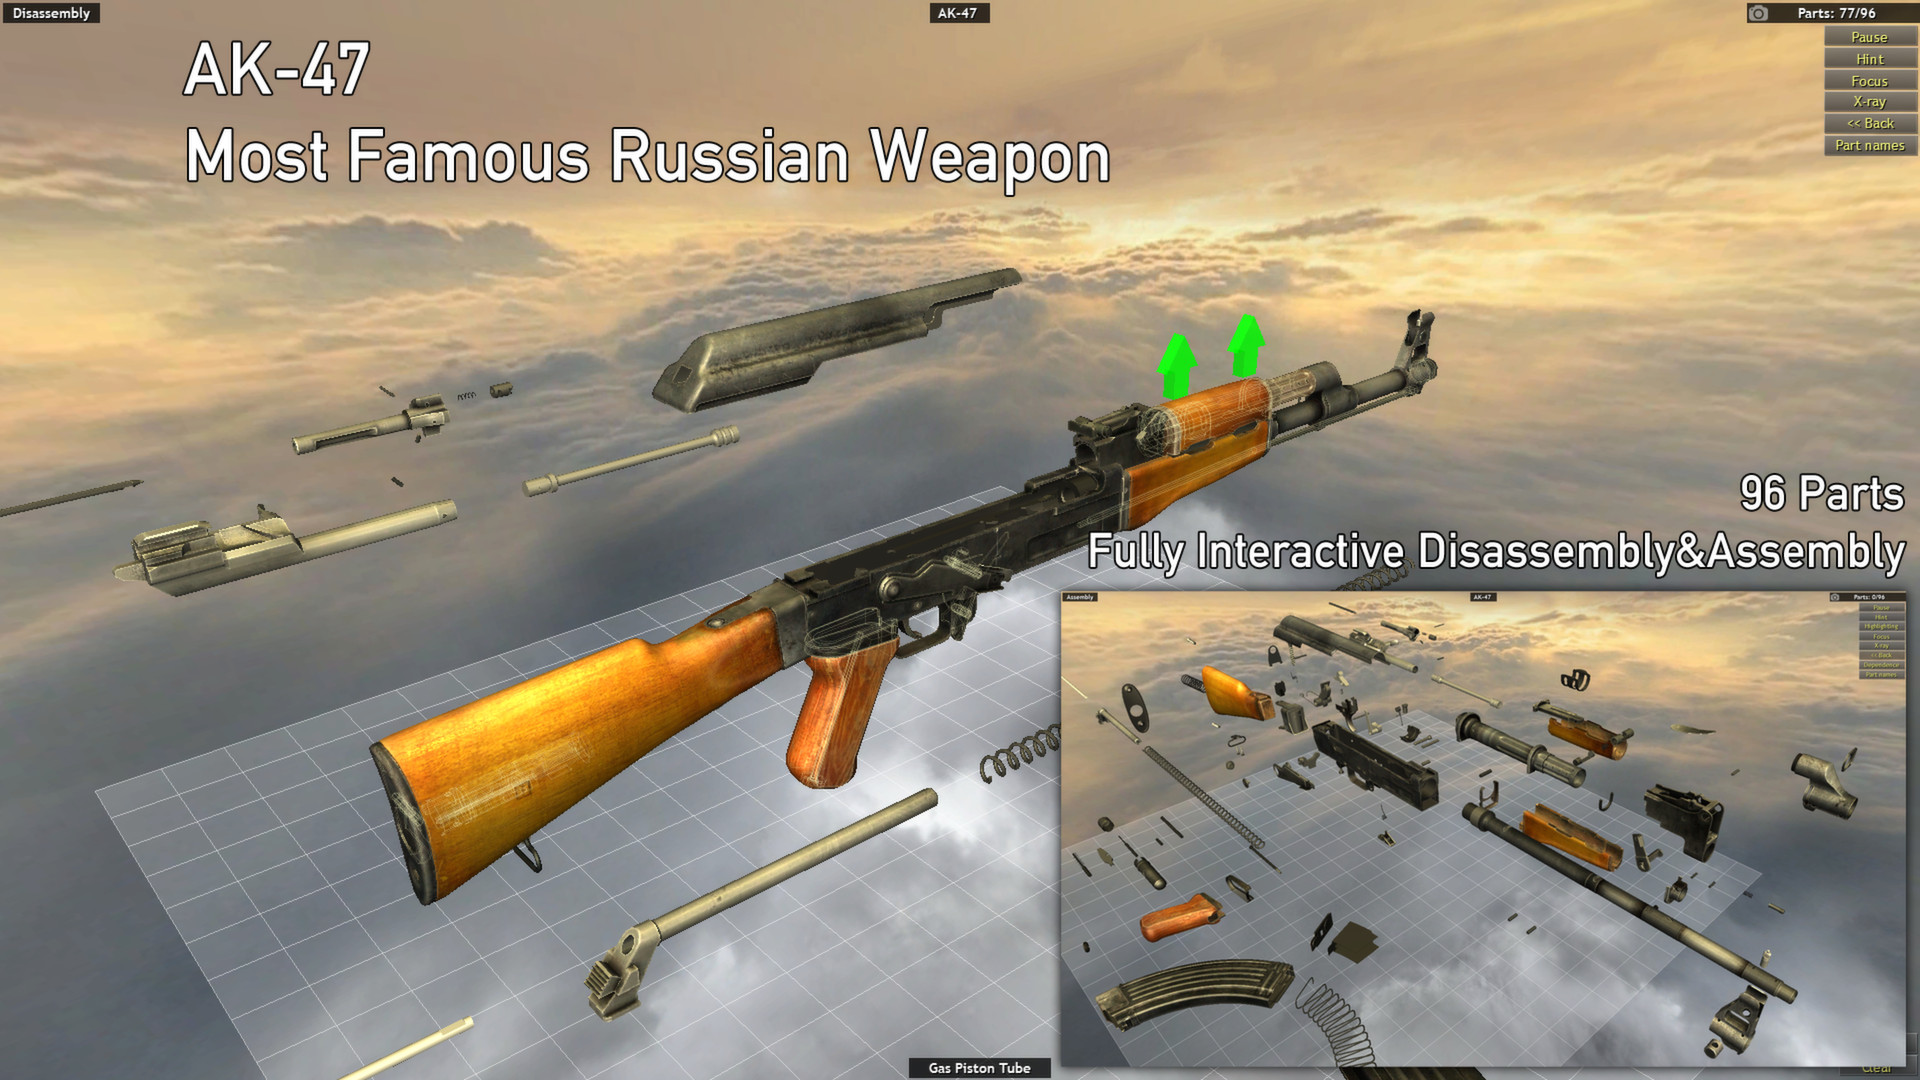 Baixe War Gun: Jogos de Armas Online no PC